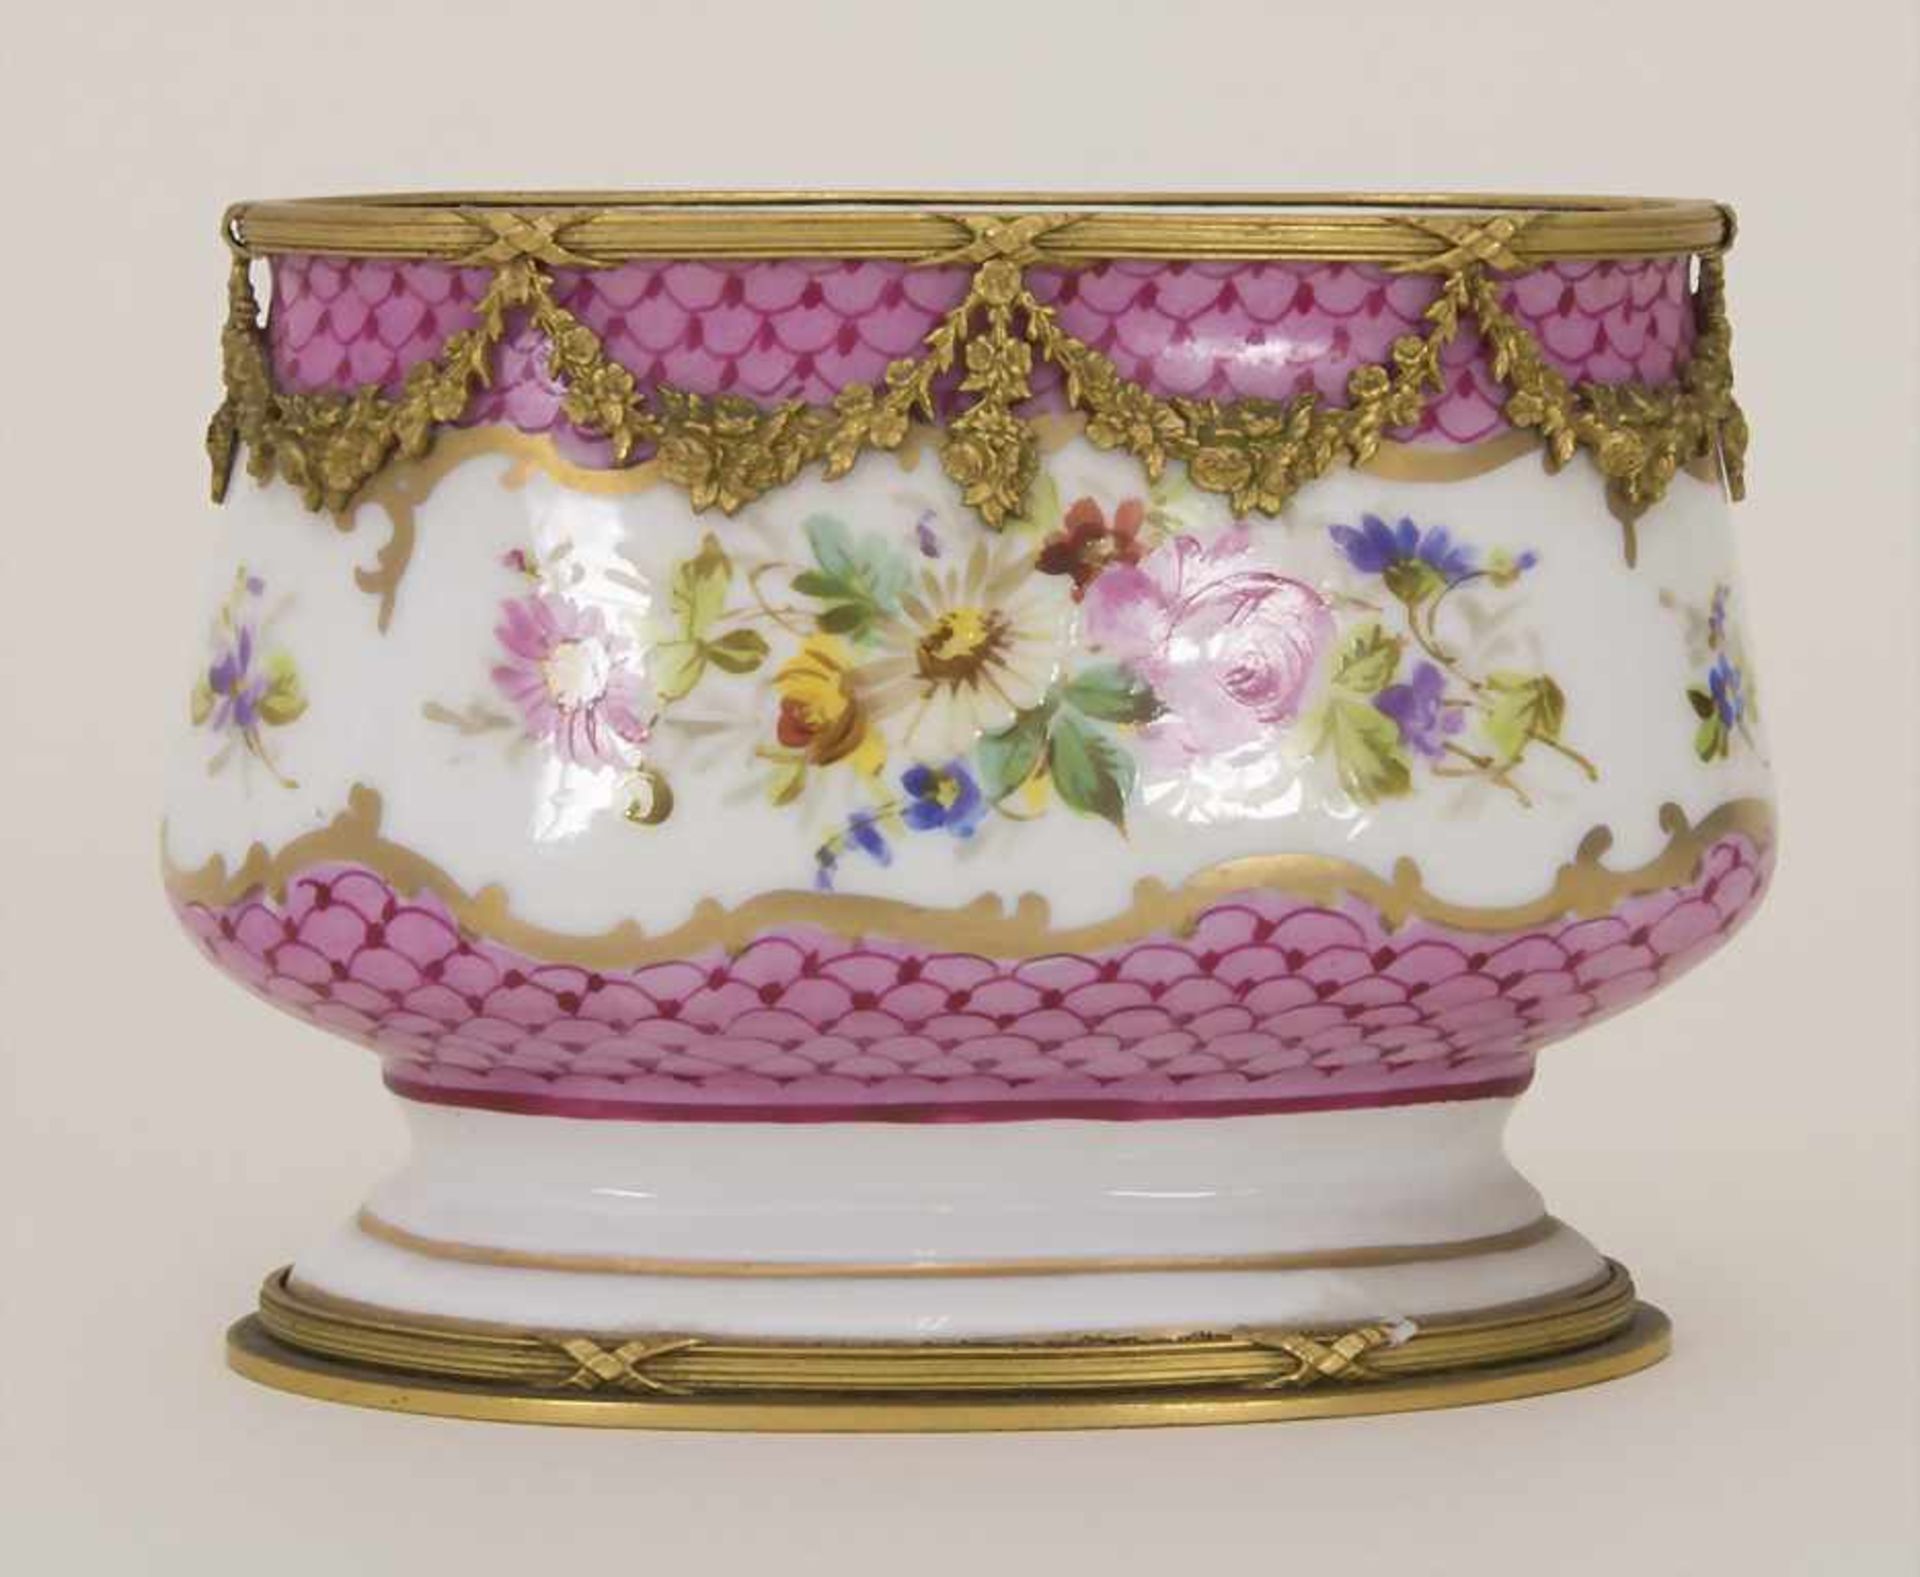 Ovale Vase mit Blumenbouquets / An oval vase with flowers, Ende 19. Jh.Material: Porzellan, - Bild 2 aus 6